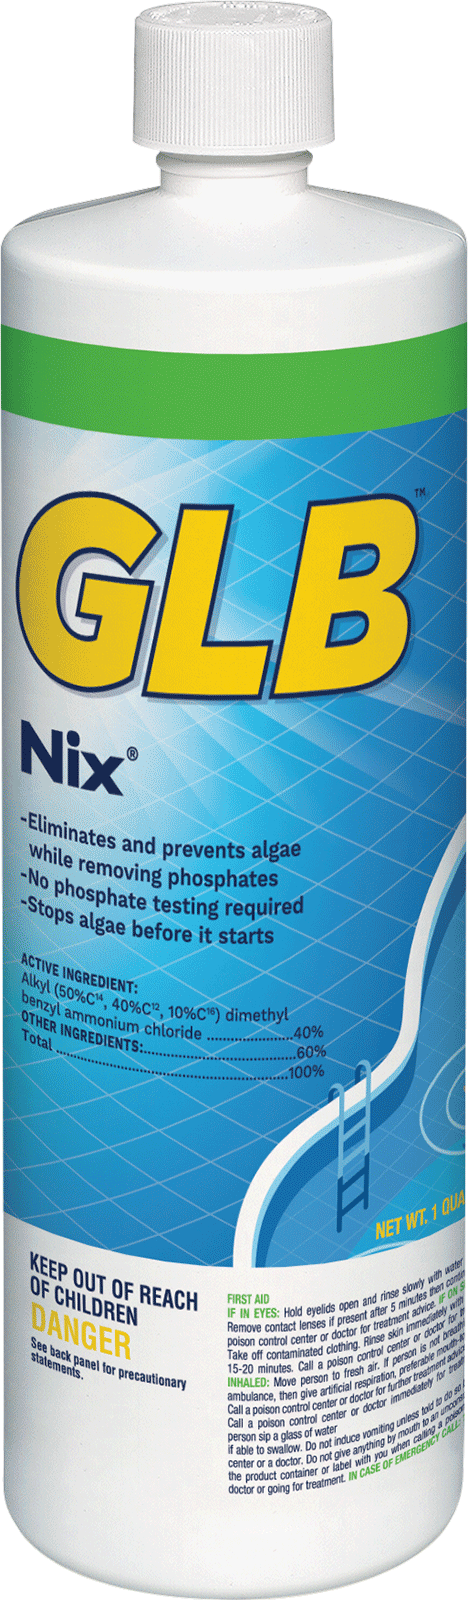 GLB® Nix